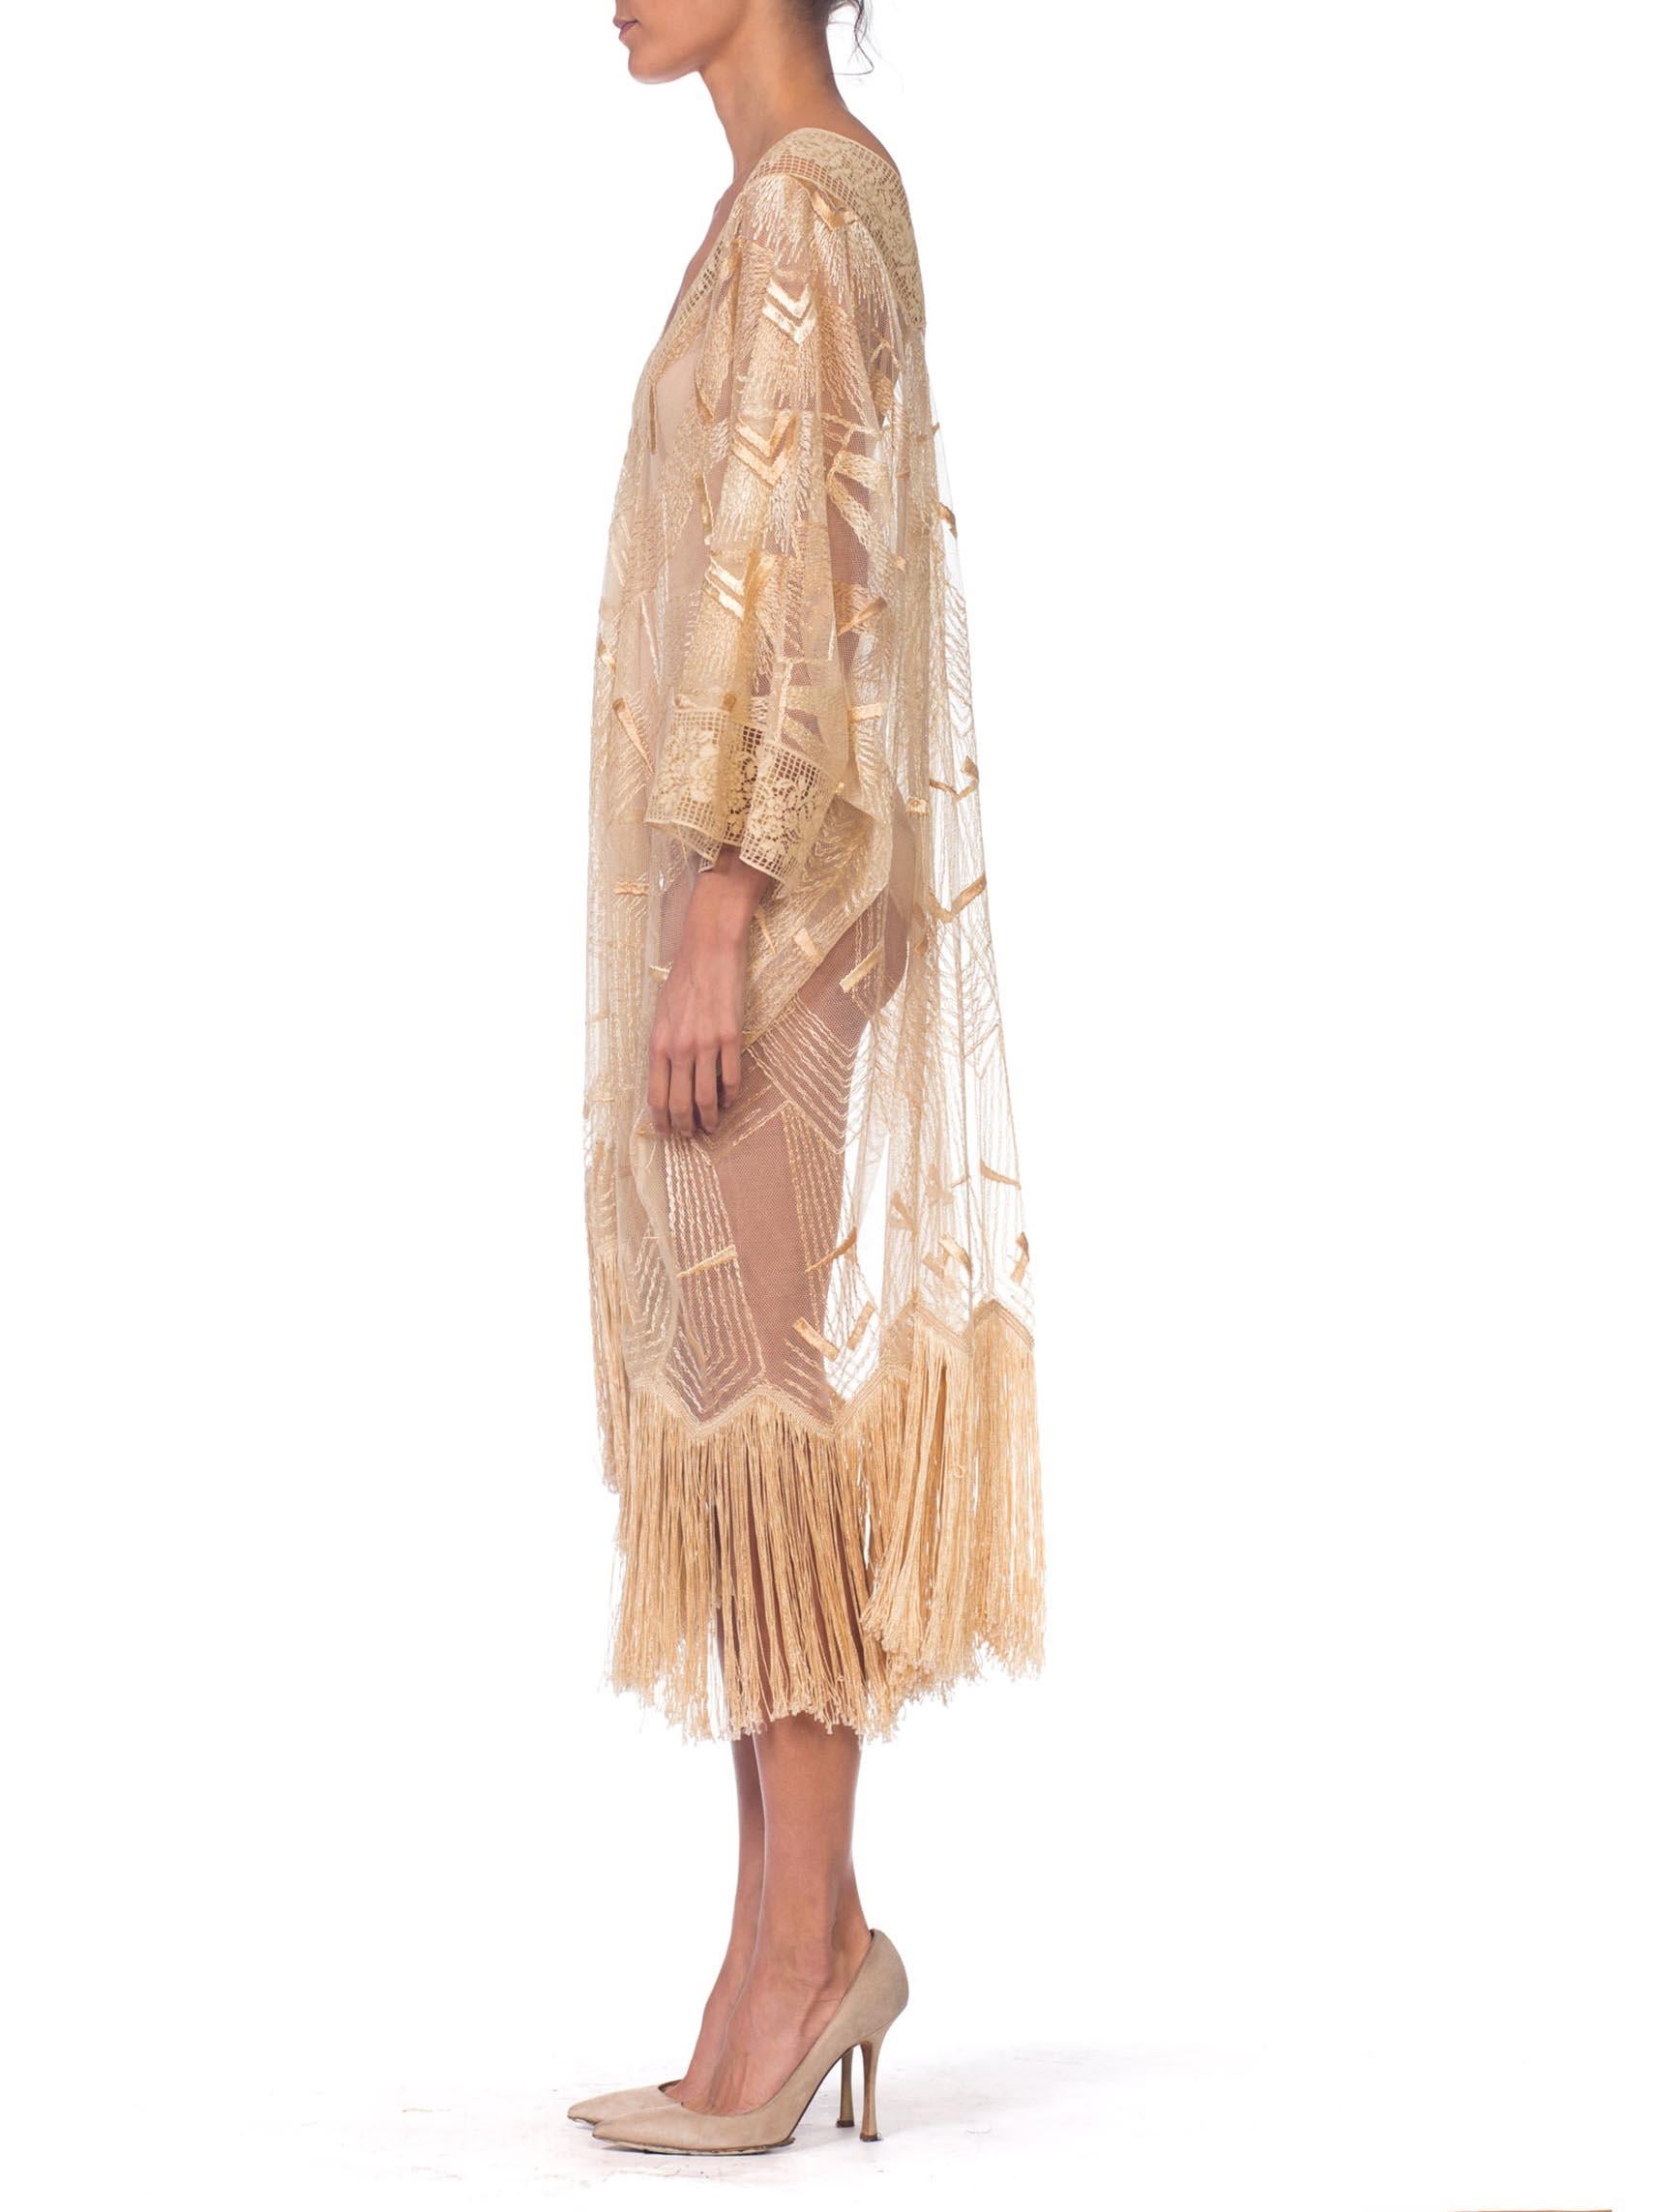 Beige Morphew Kaftan Tunic Dress Made from Art Deco 1920s lace